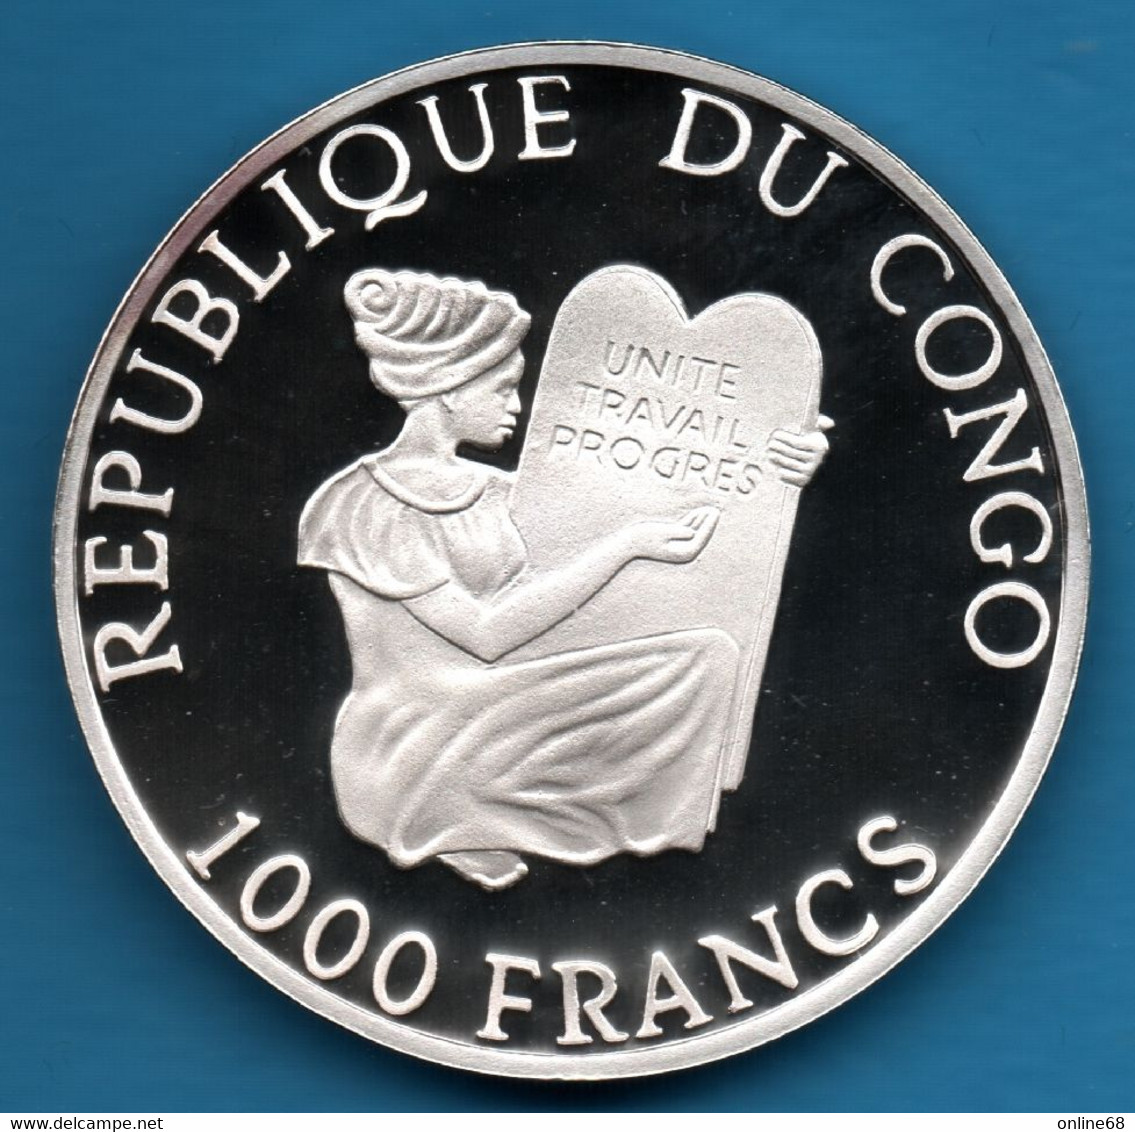 REPUBLIQUE DU CONGO 1000 Francs 1997 CORBITA CARGO ROMANI  KM# 29 	Argent 999‰ SILVER PROOF - Congo (Democratic Republic 1998)